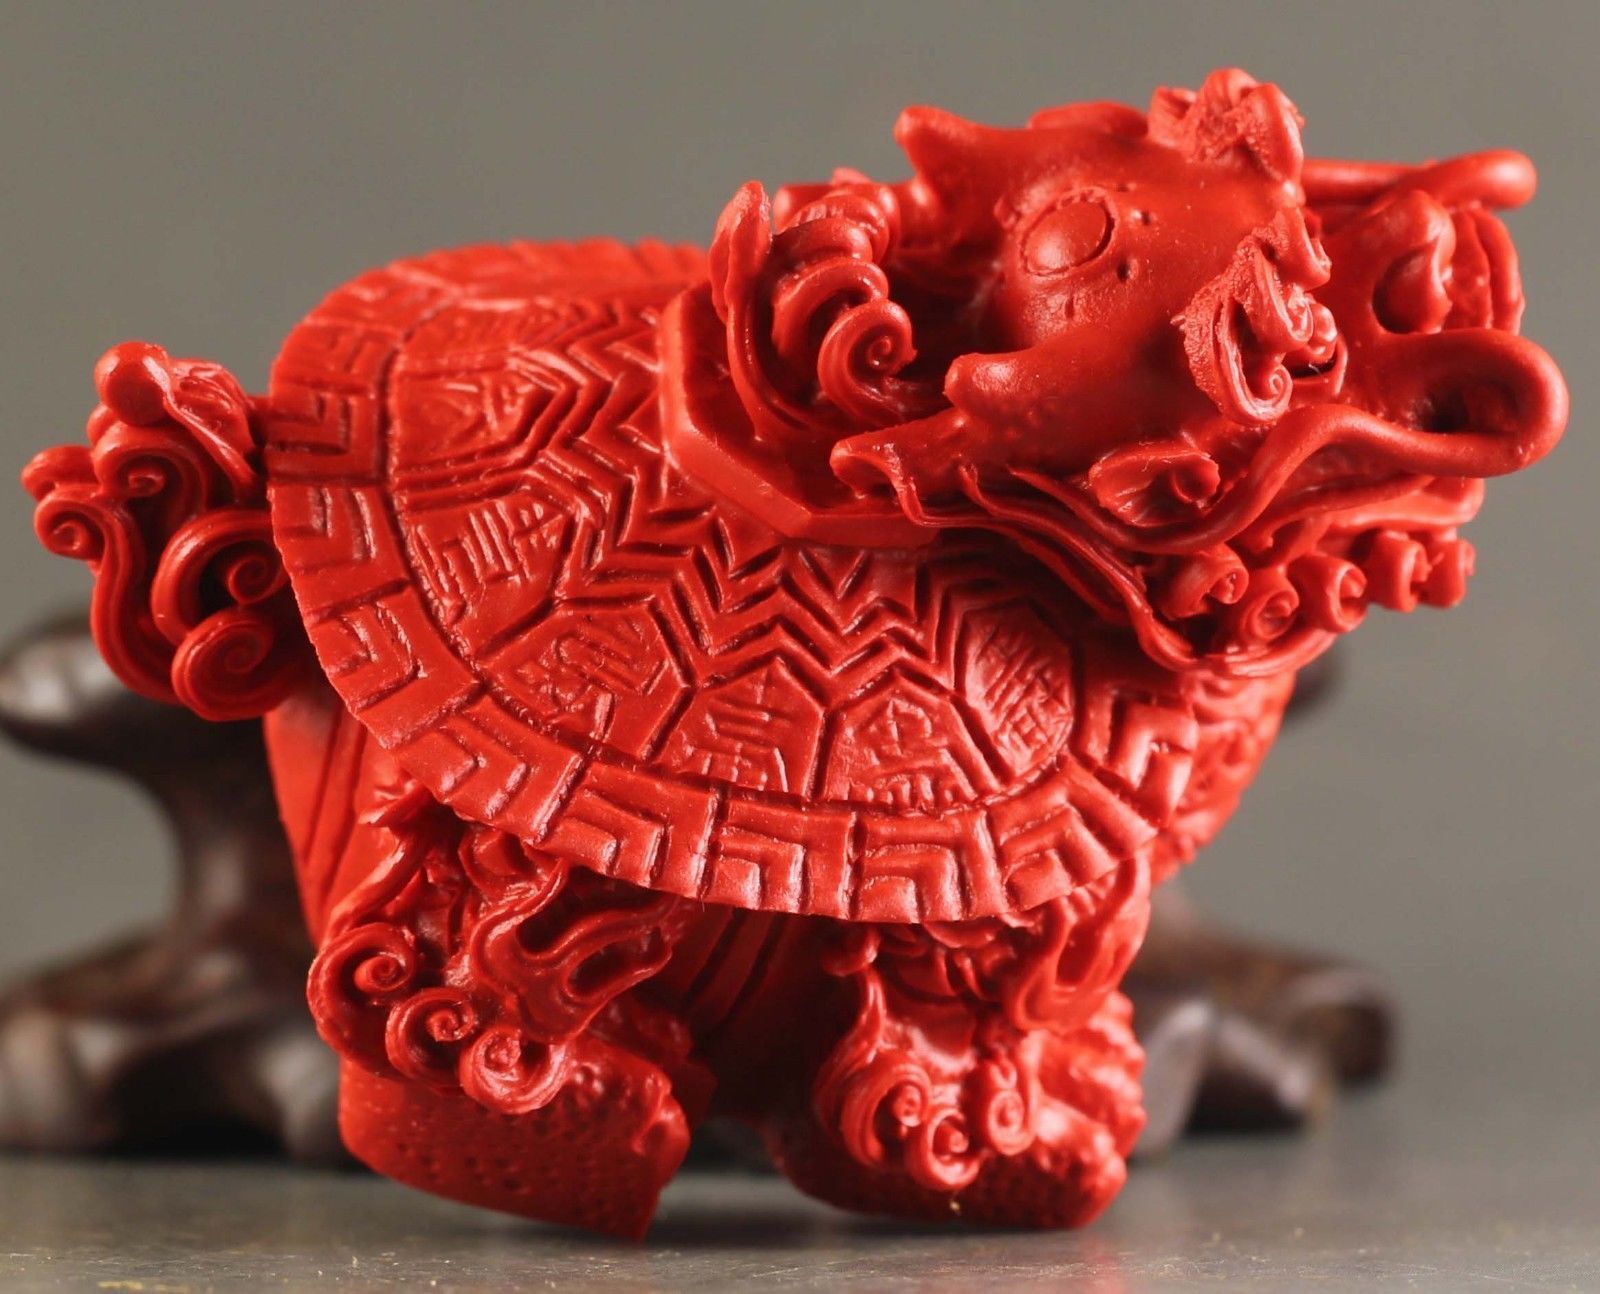 Chinese natural cinnabar red jade hand-carved dragon tortise pendant 2.2 inch Без бренда - фотография #6